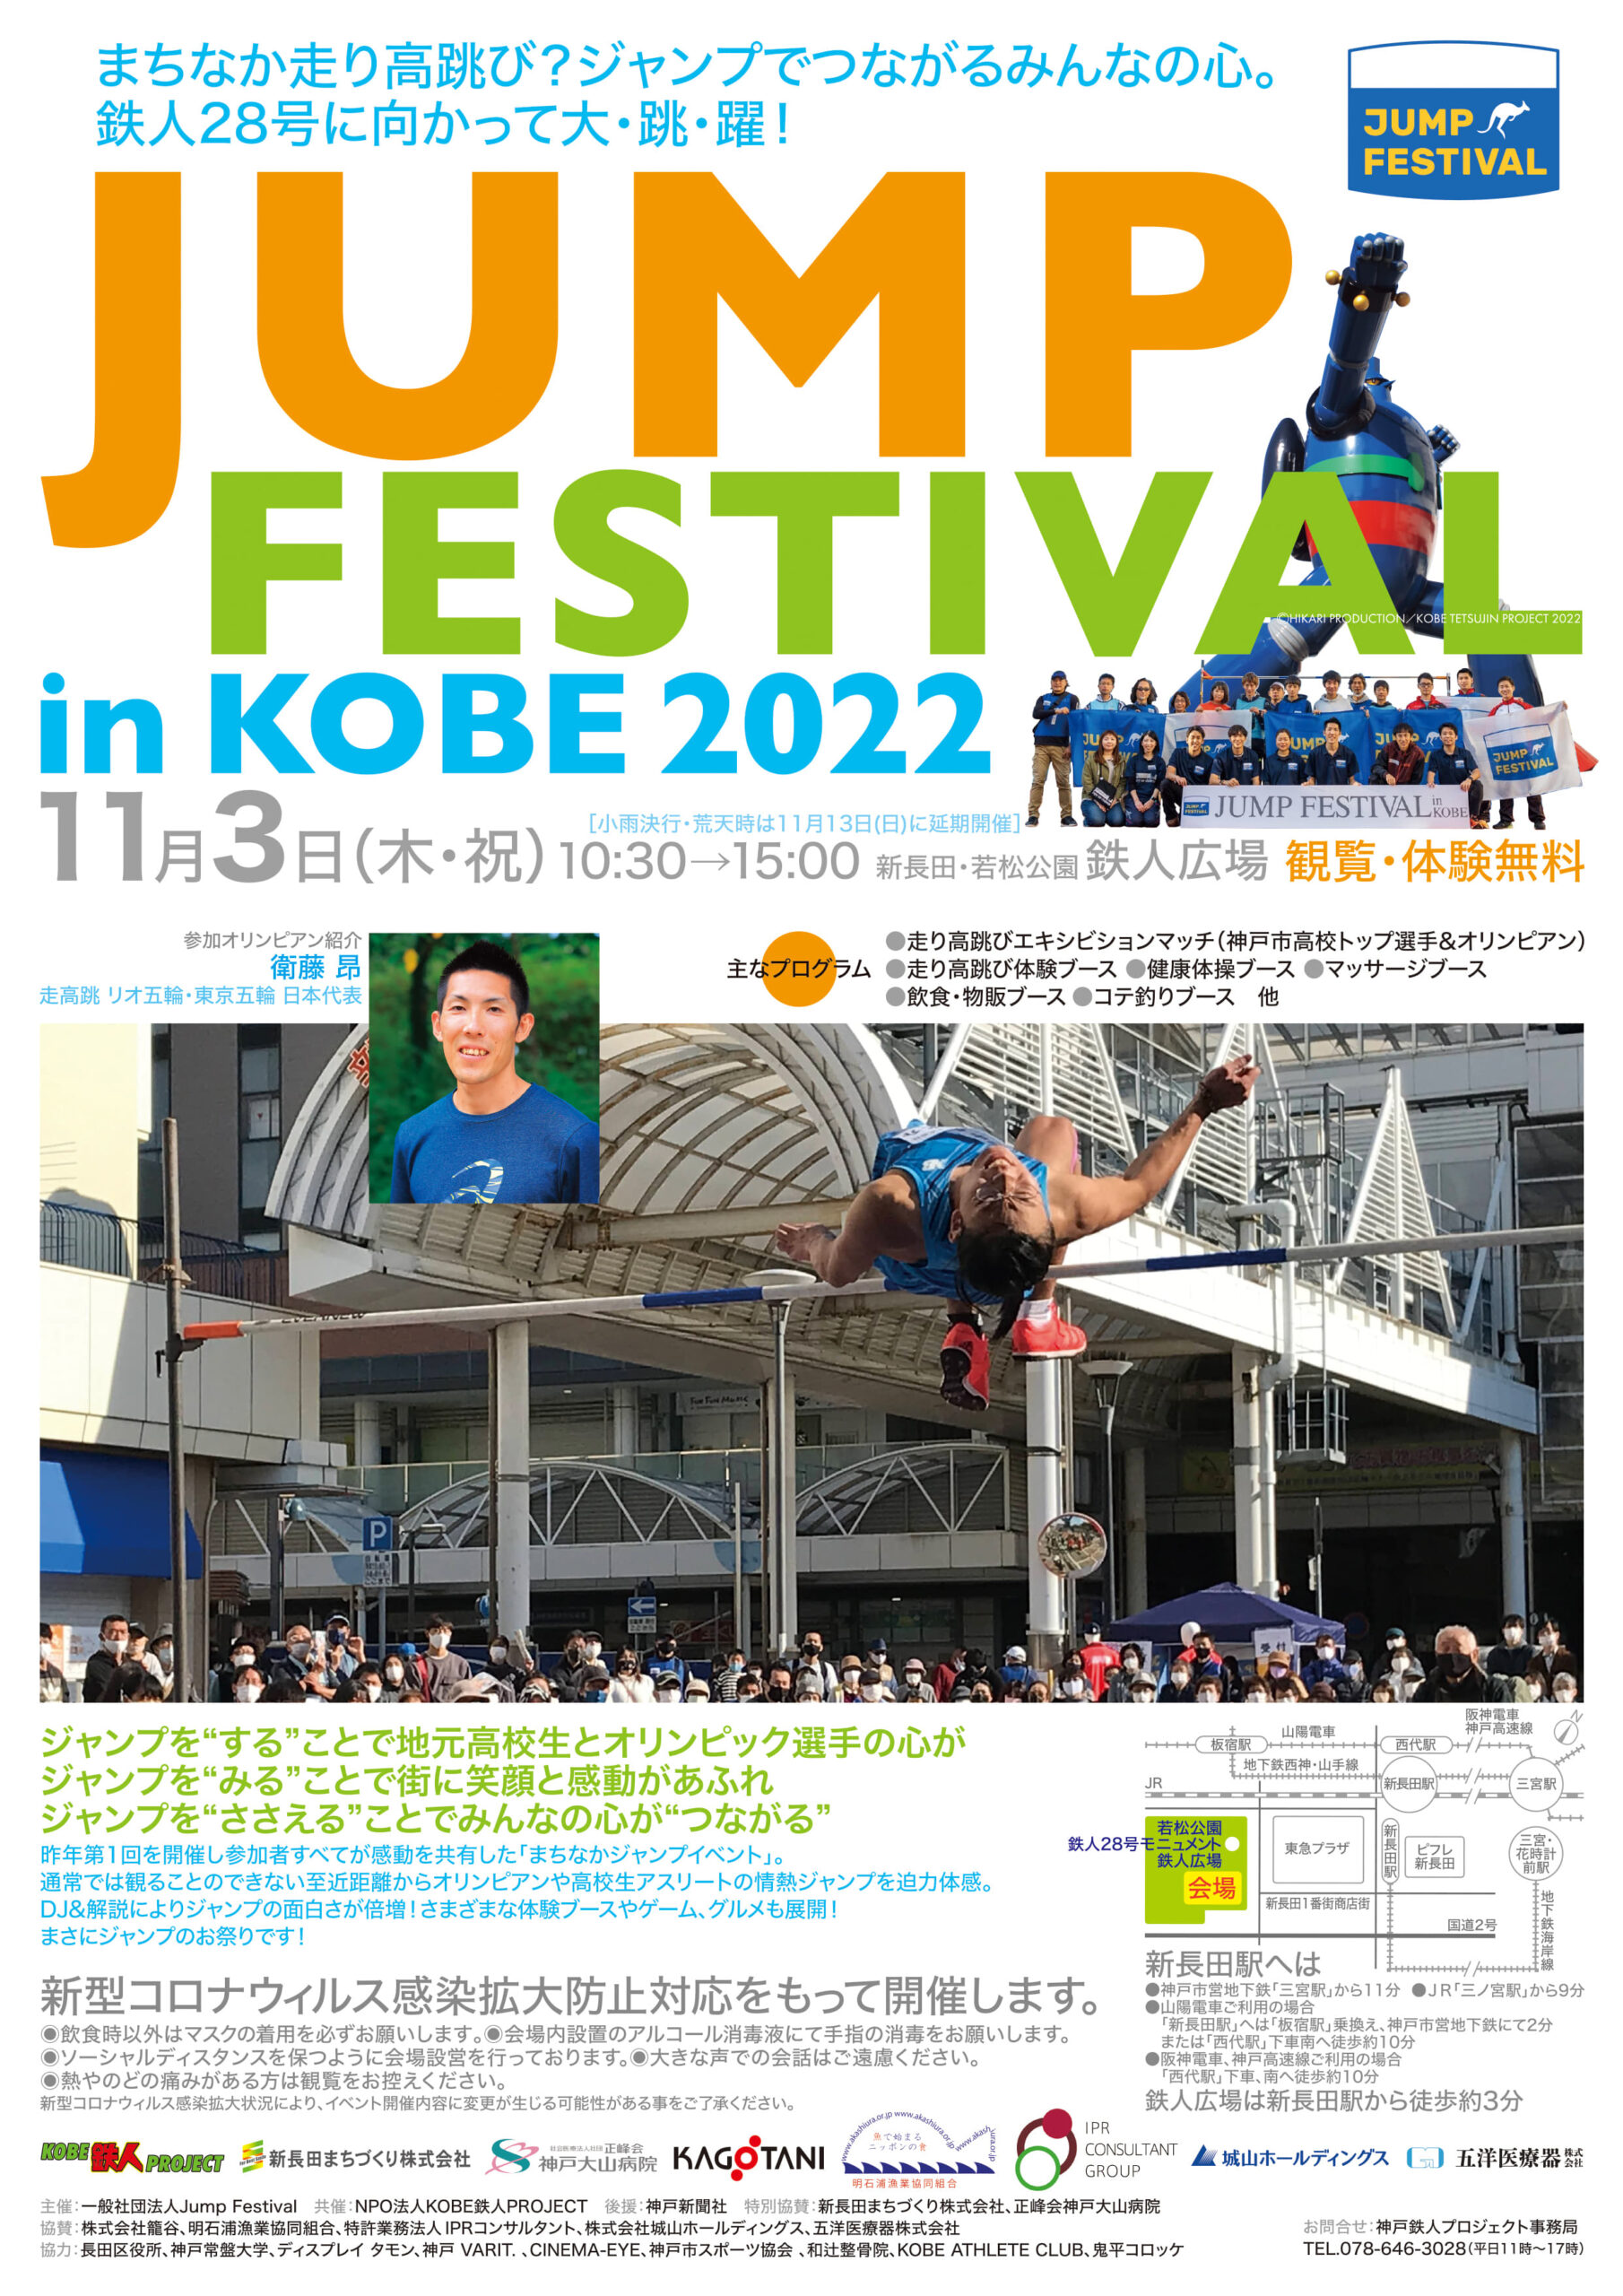 JUMP FESTIVAL in KOBE 2022（11/3） ジャンプフェスティバル / Jump Festival